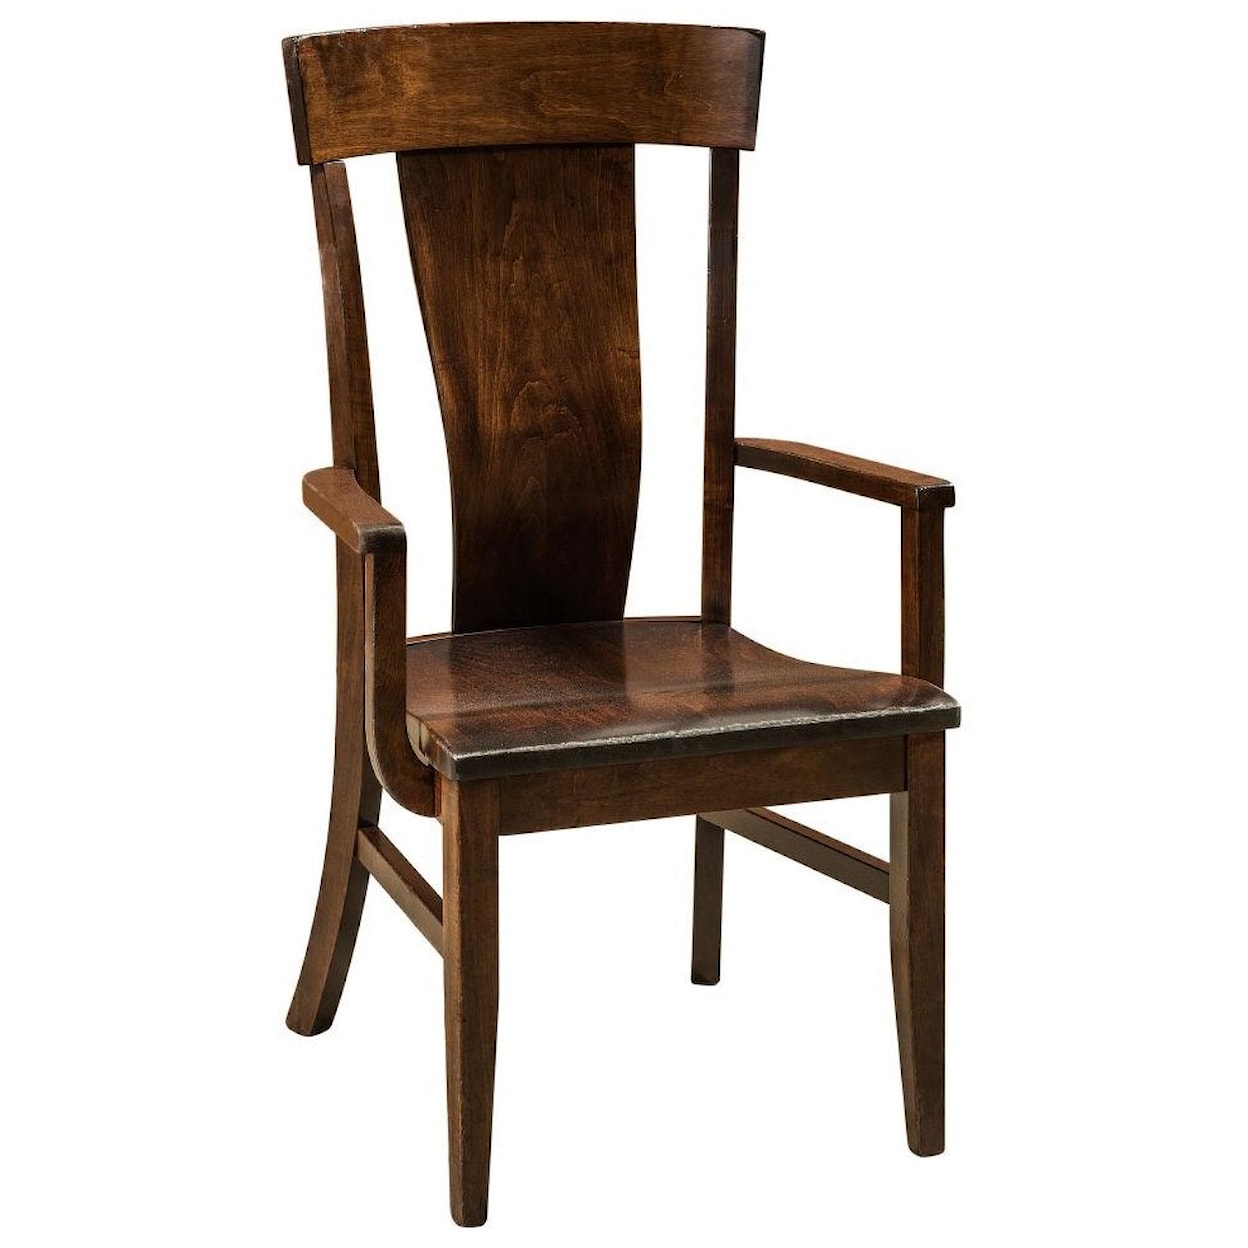 F&N Woodworking Baldwin Arm Chair